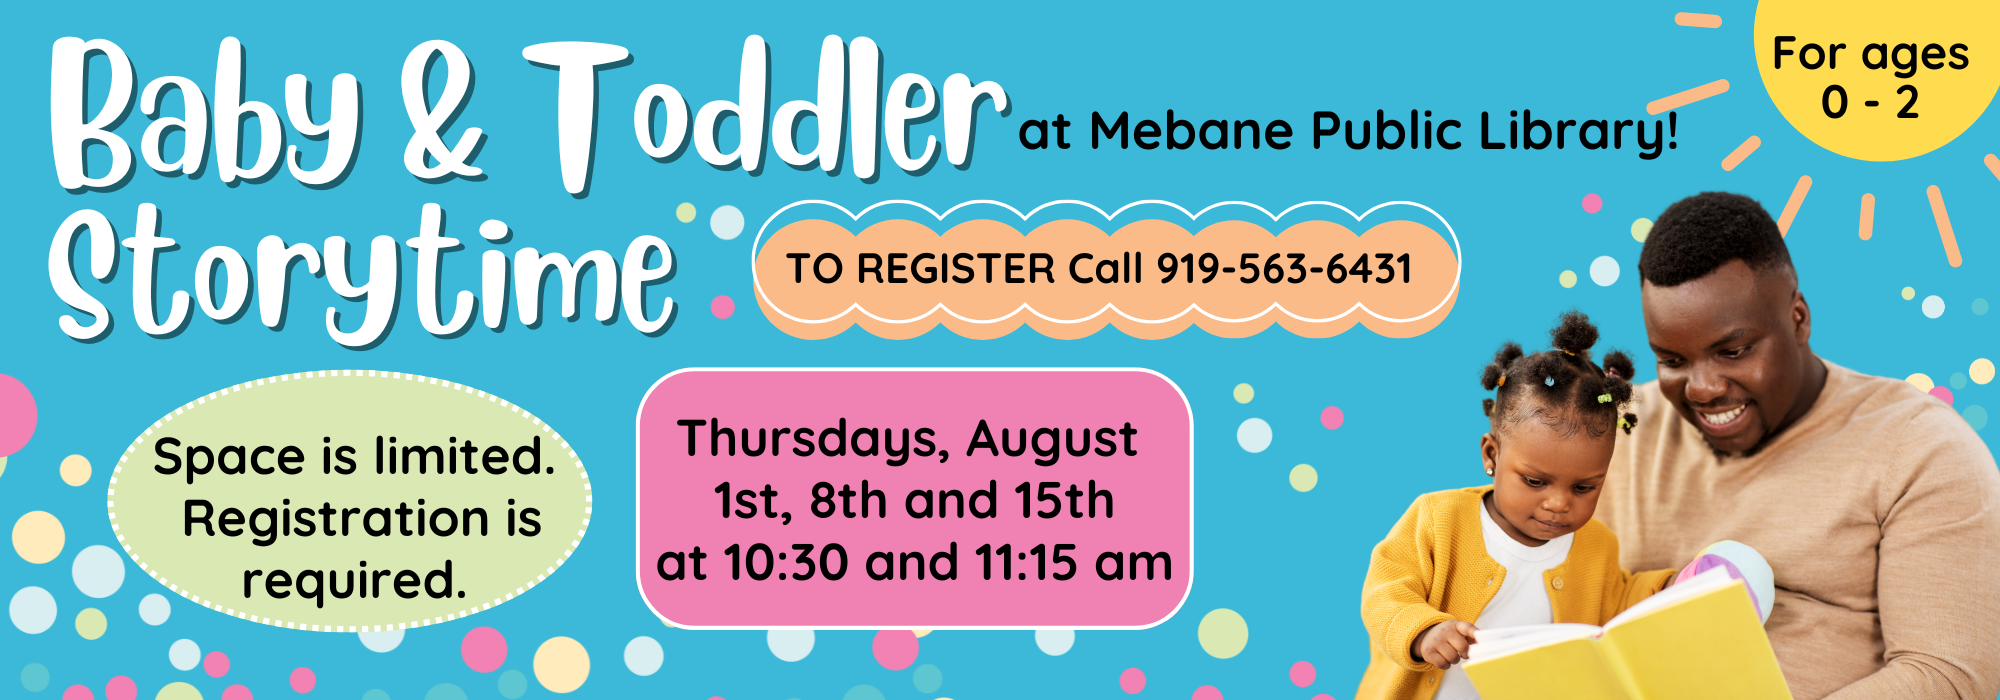 8.1, 8.8, & 8.15 at 1030 & 1115 am - Baby & Toddler Storytimes at Mebane